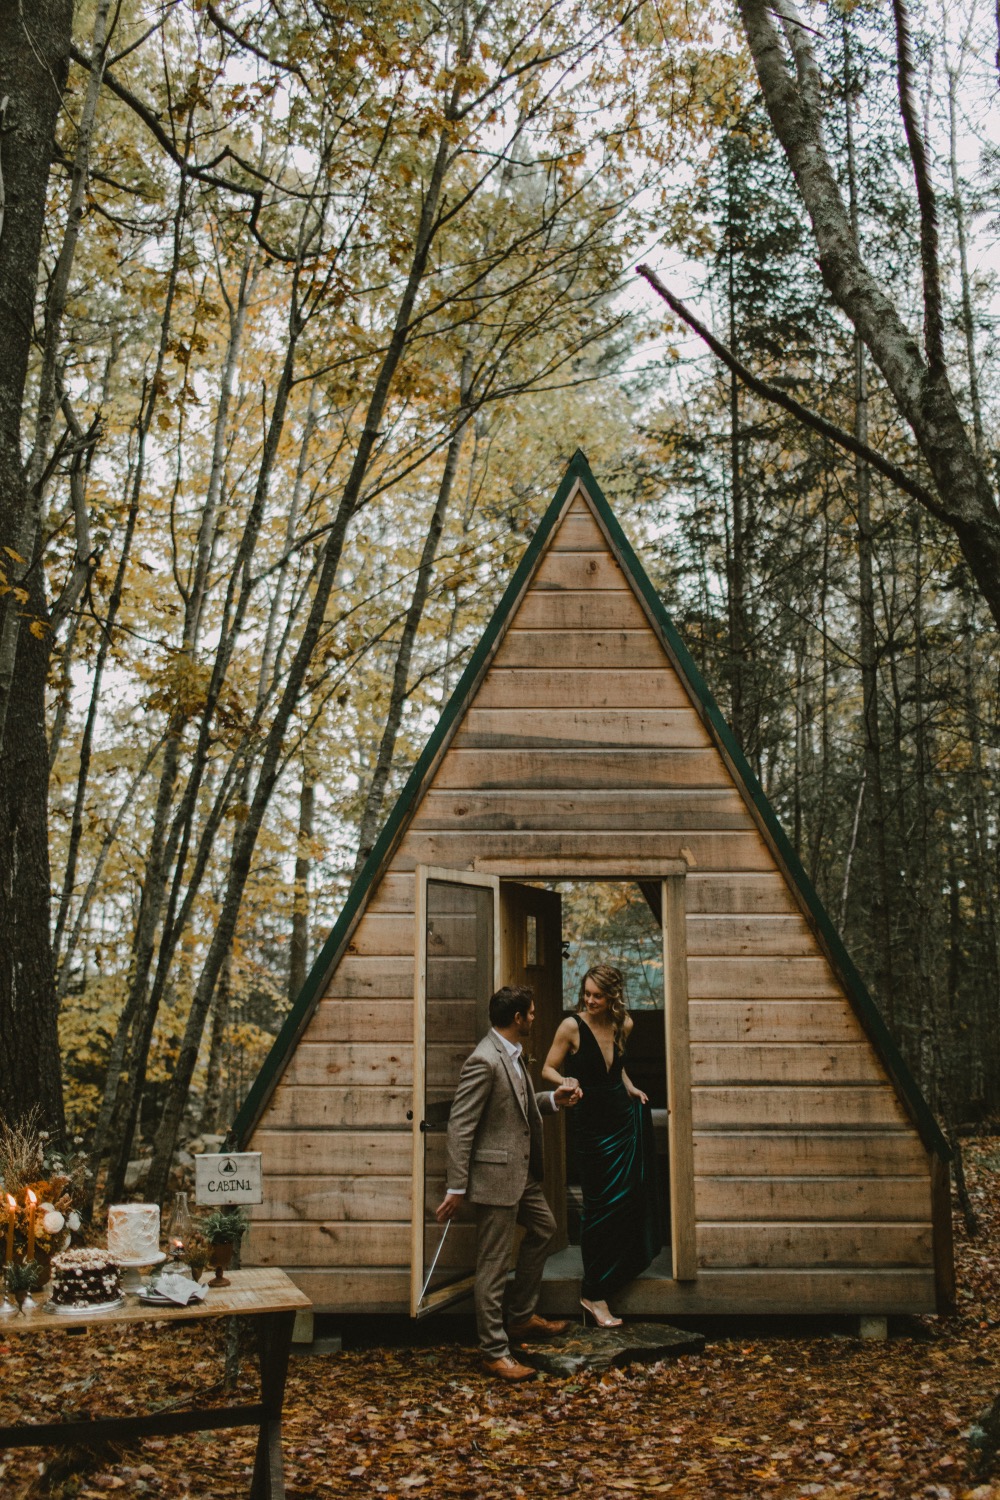 A-frame wedding venues